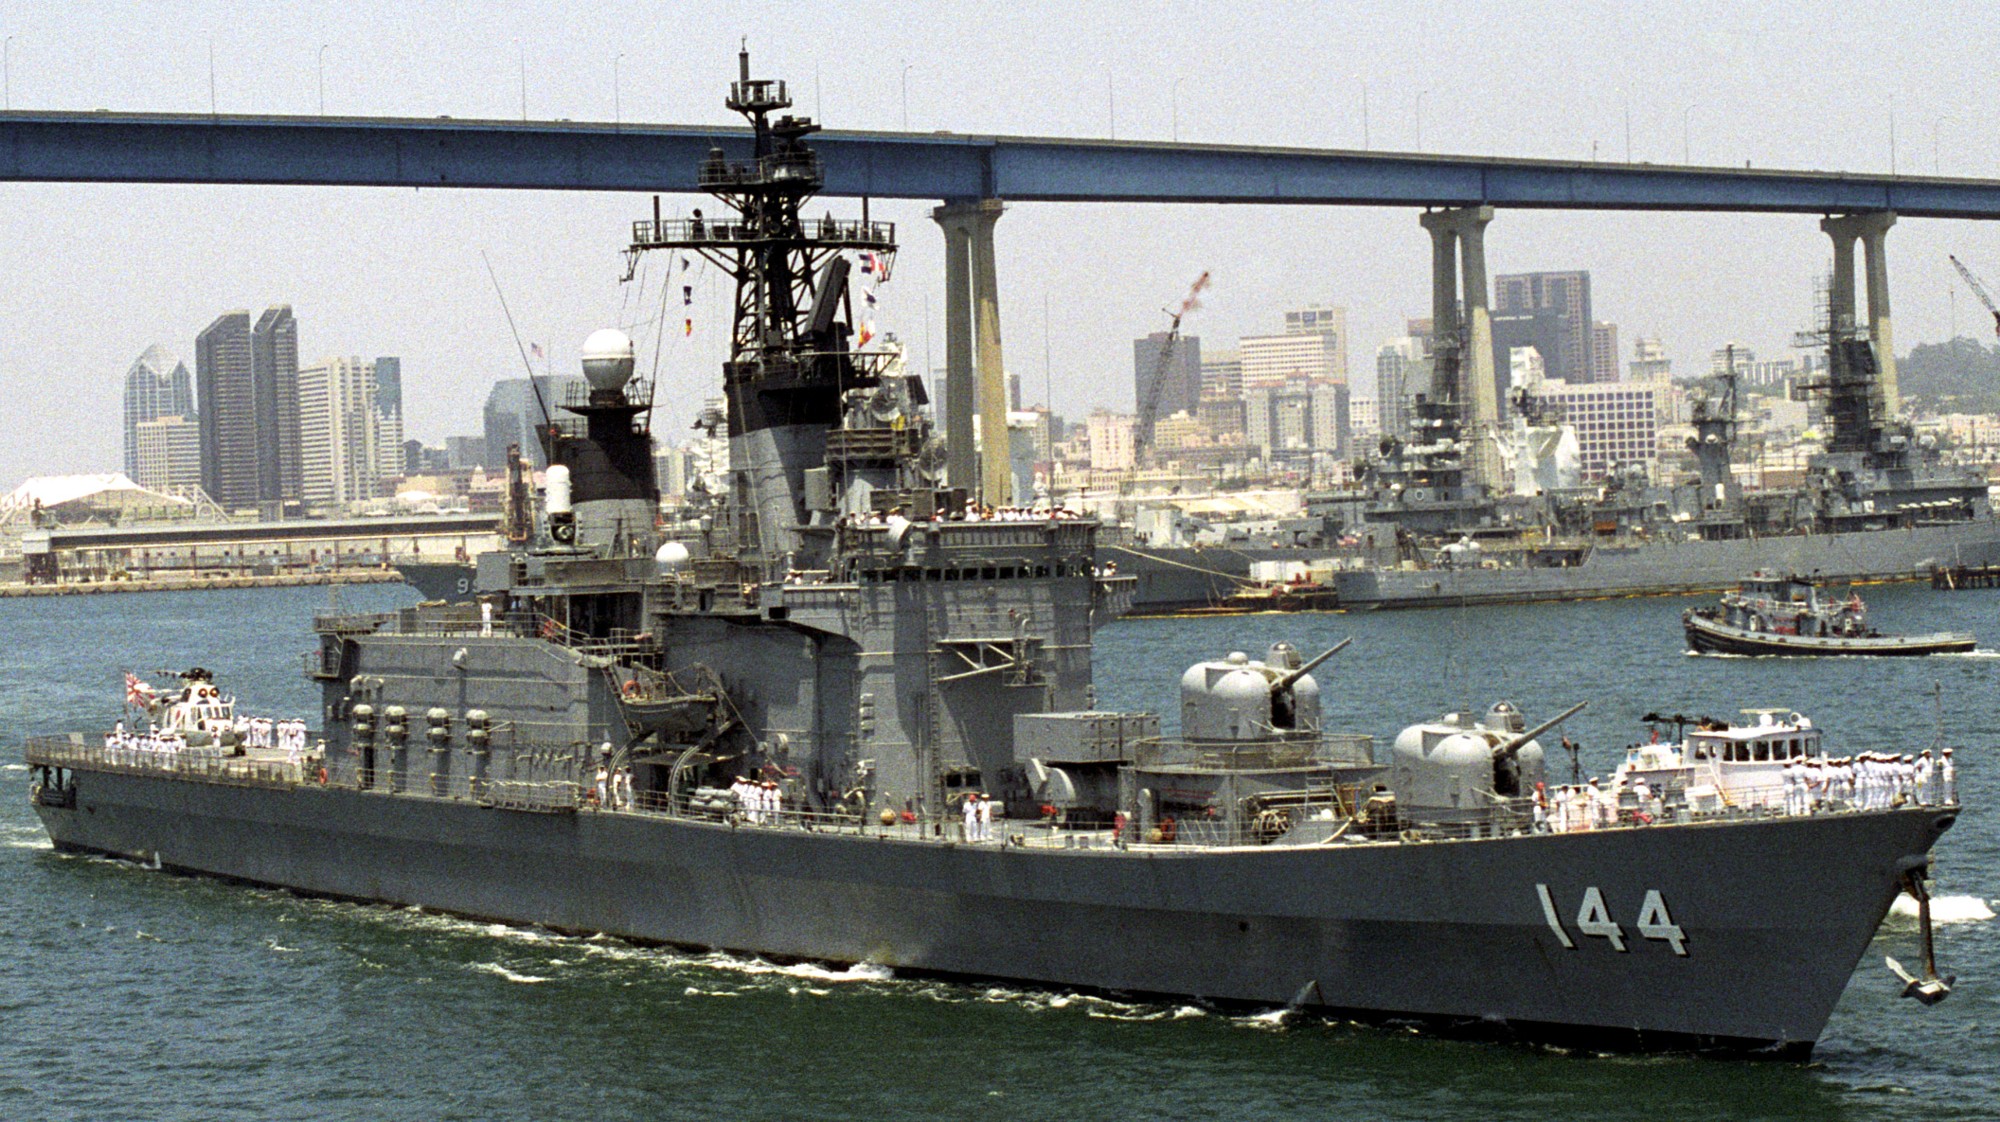 ddh-144 jds kurama shirane class helicopter destroyer japan maritime self defense force jmsdf 56